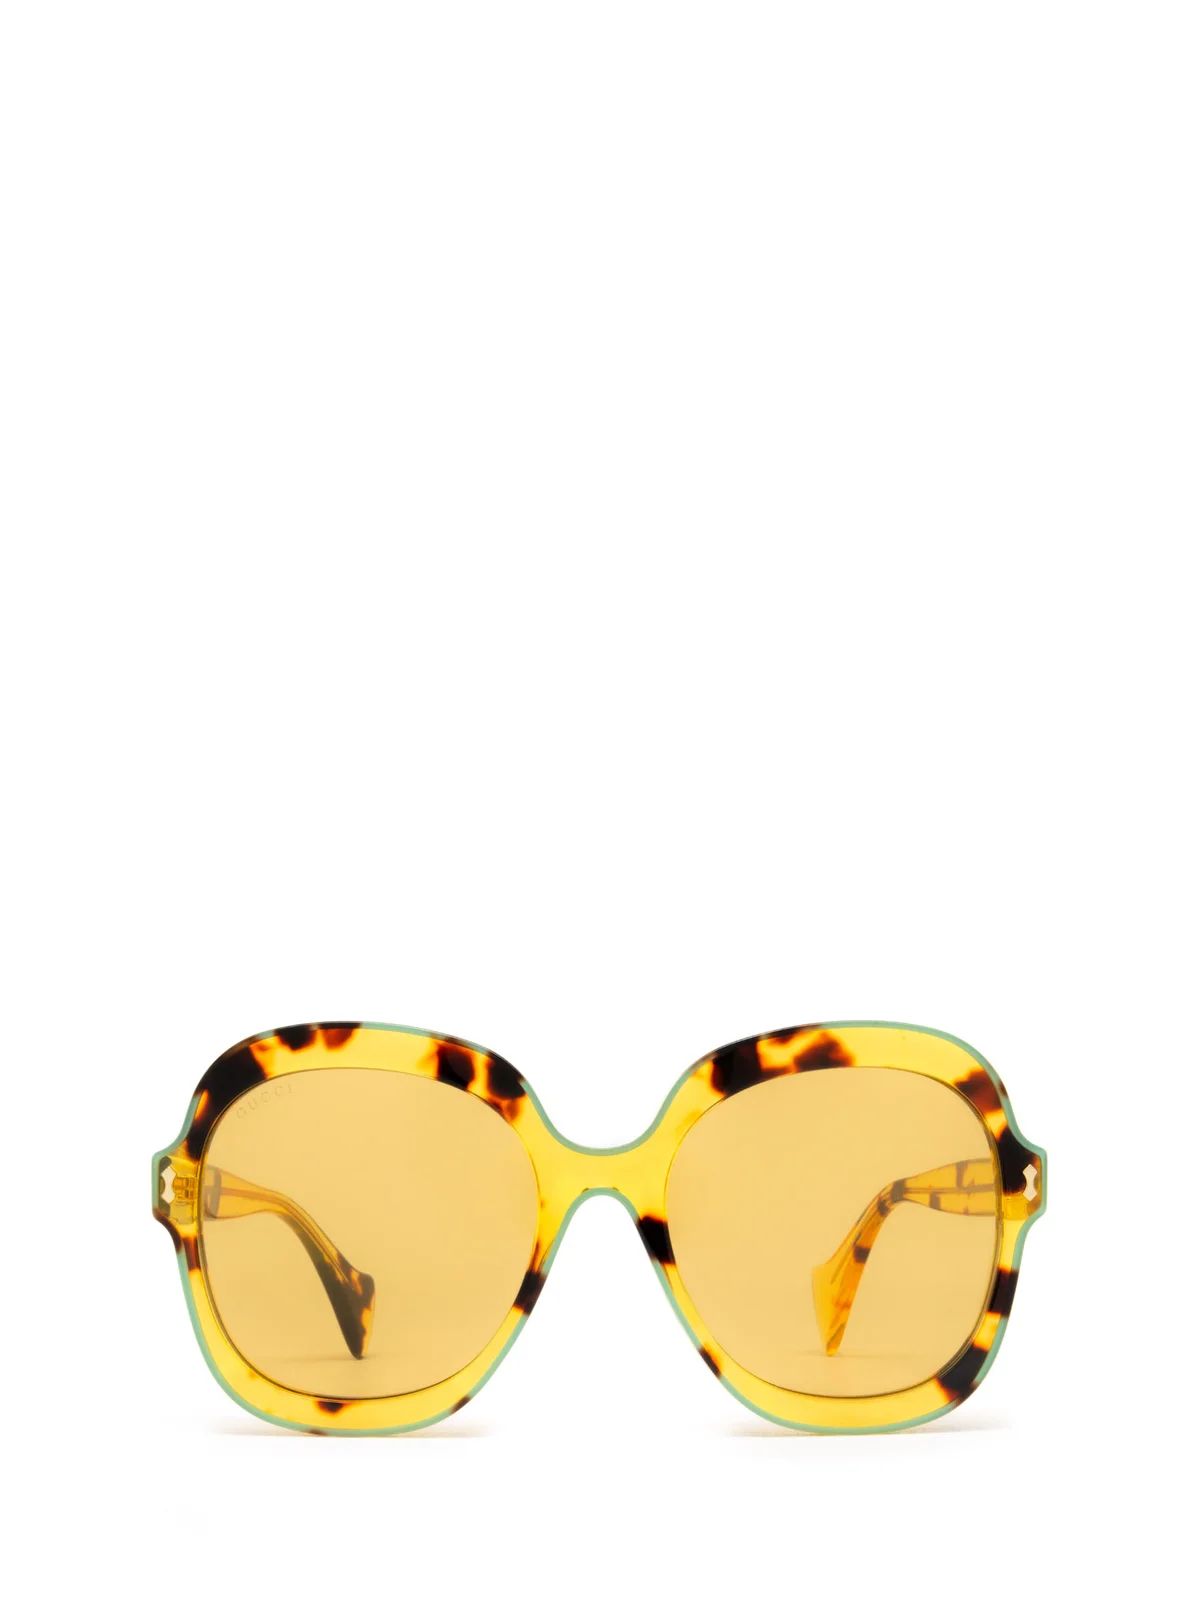 Gucci Eyewear Oval Frame Sunglasses | Cettire Global